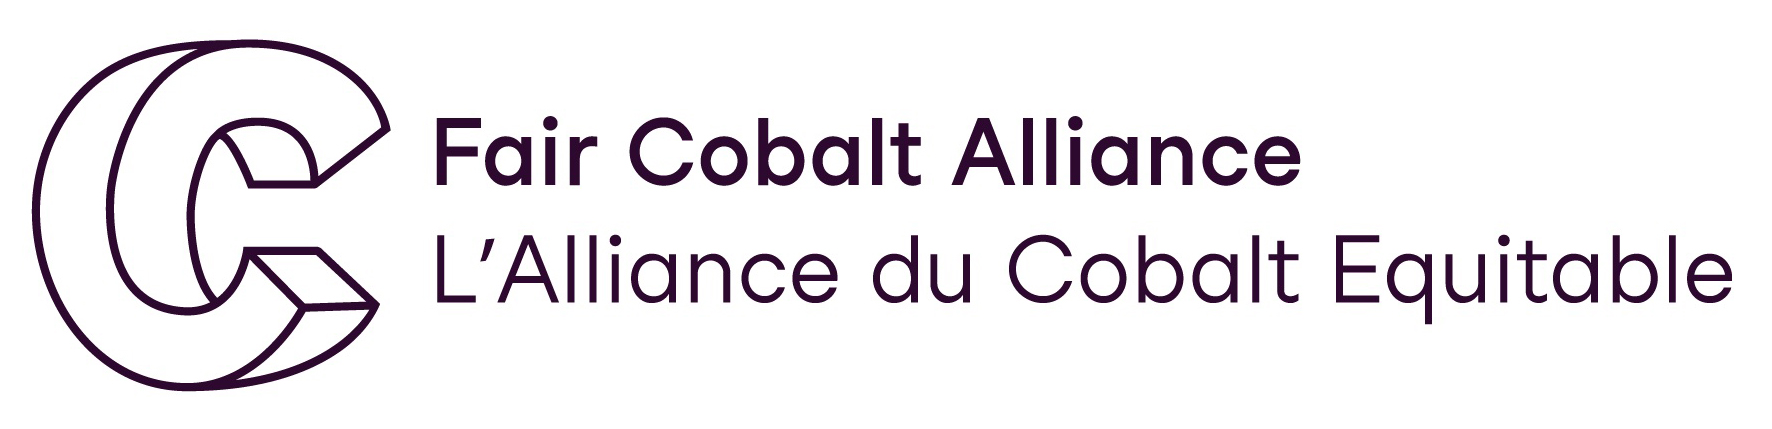 Fair Cobalt Alliance (FCA)